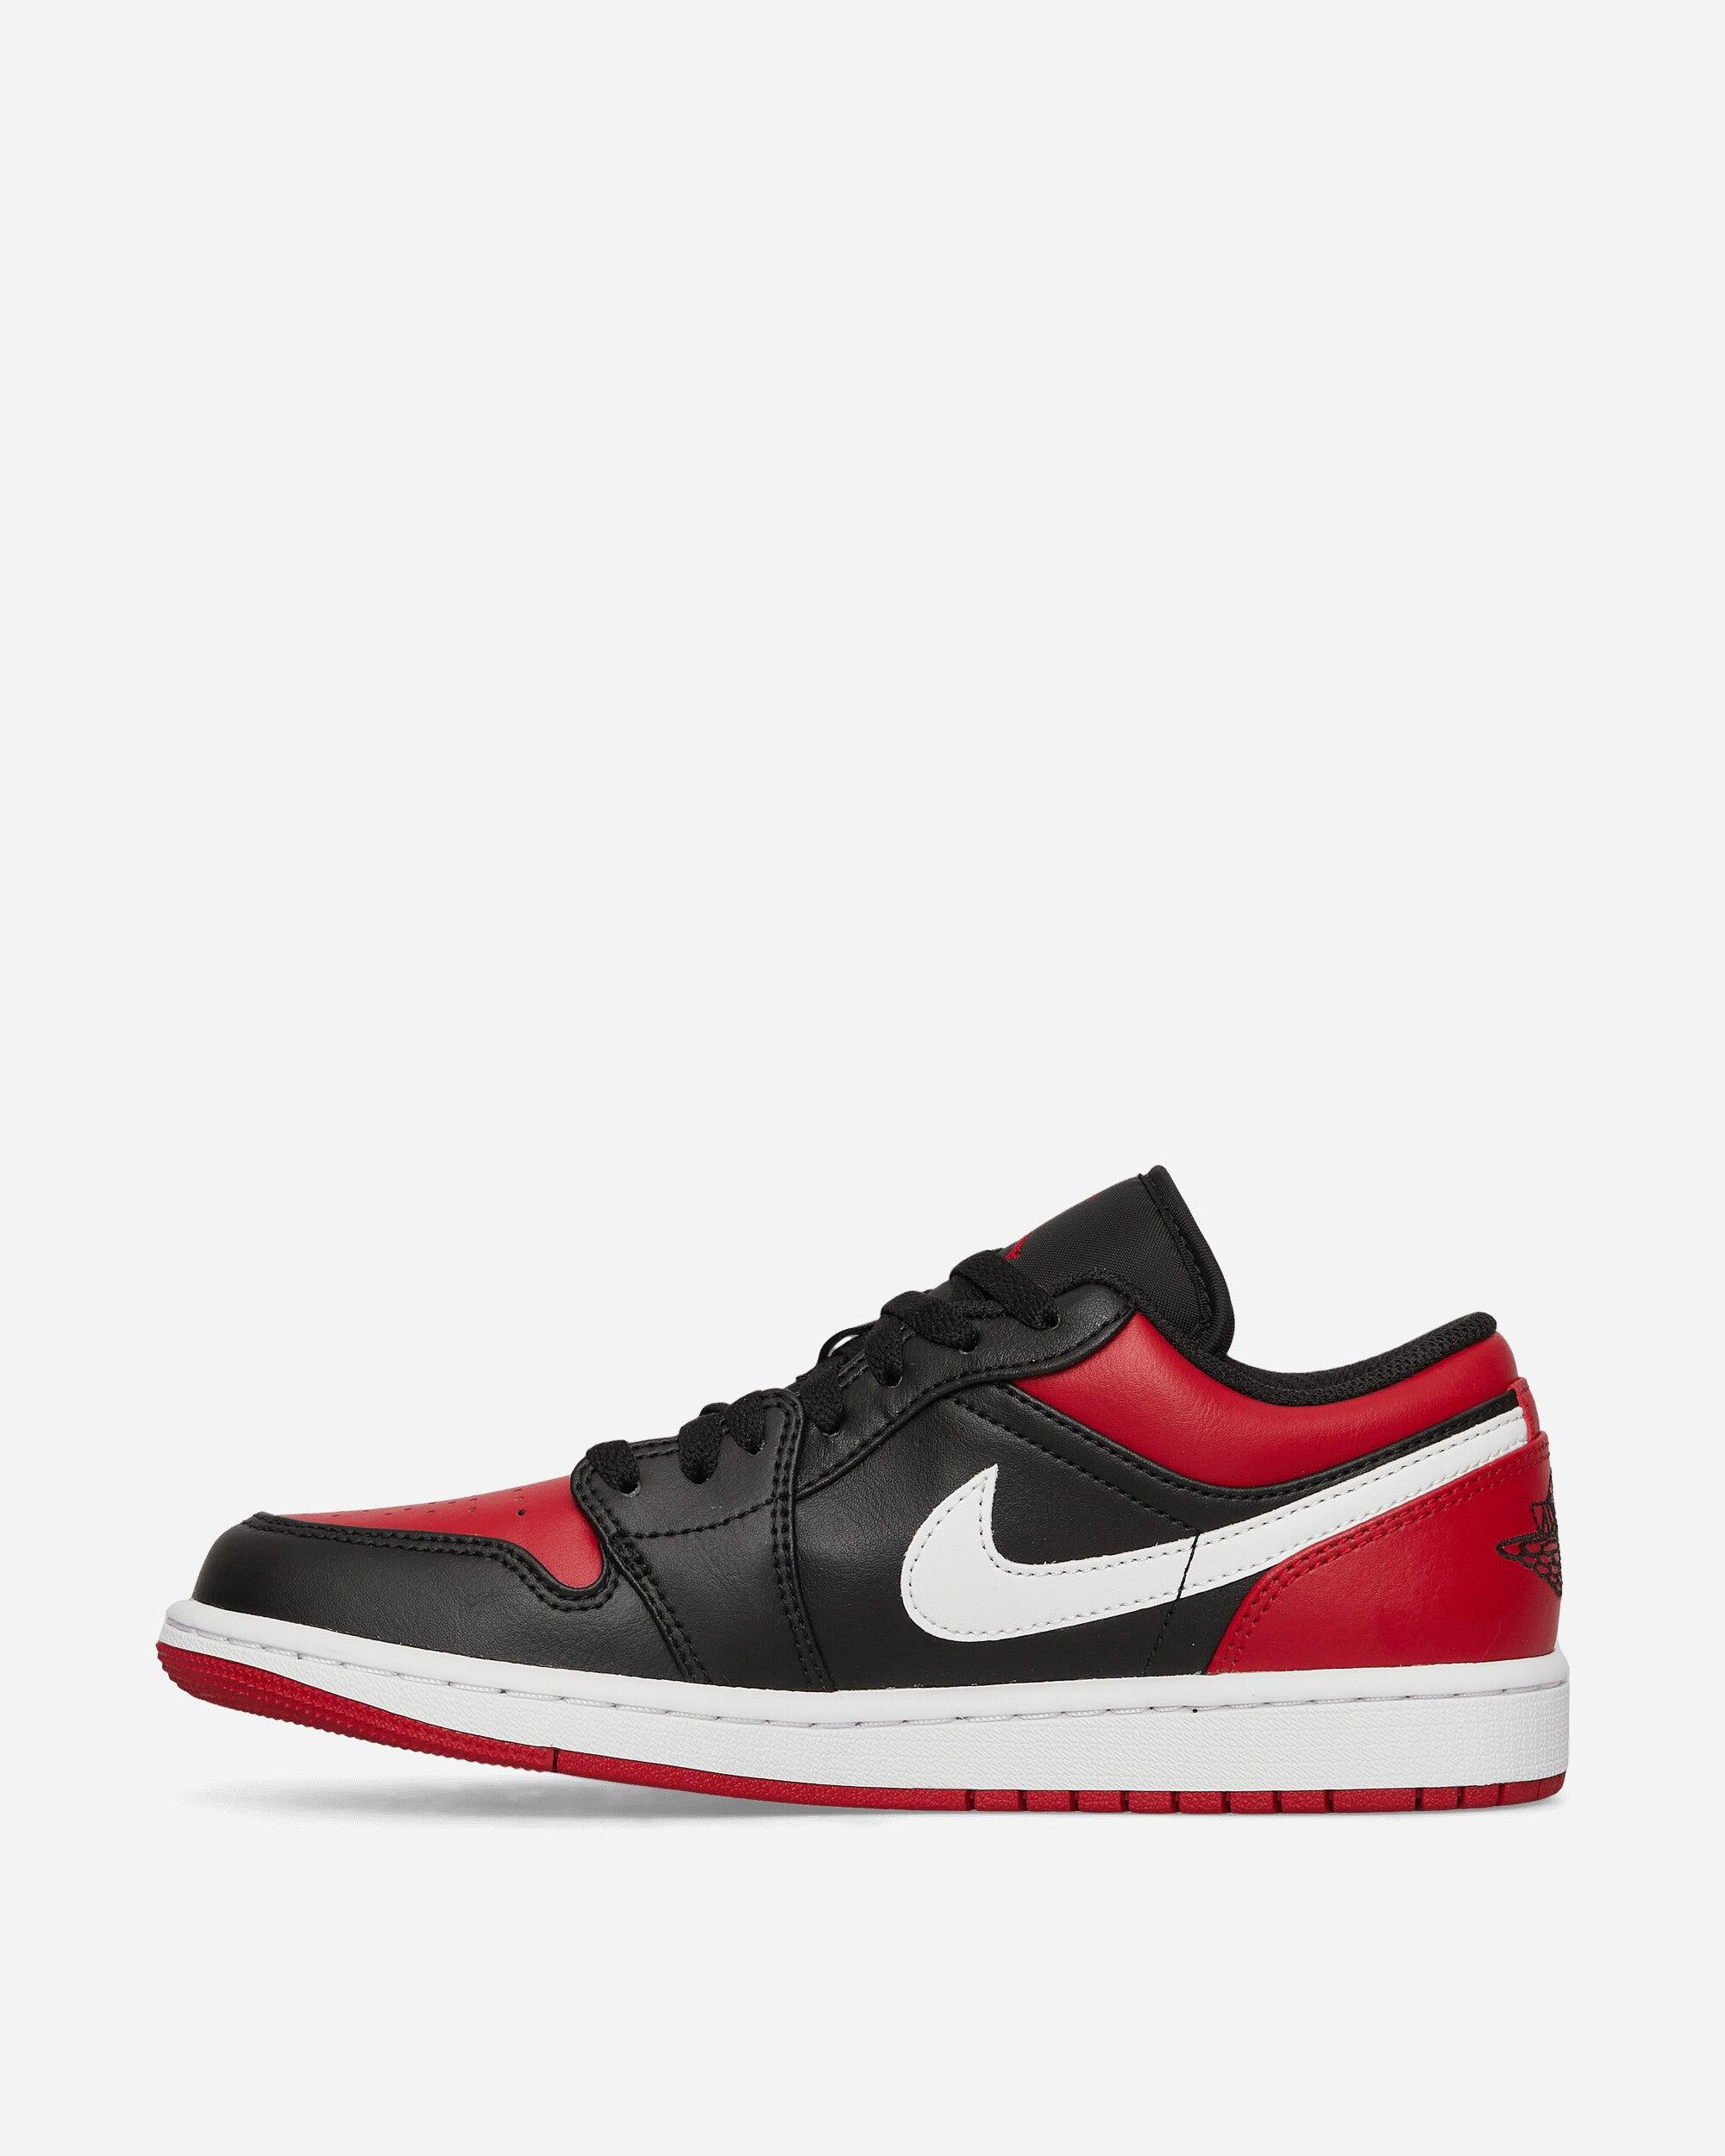 Nike Air Jordan 1 Low Sneakers Black / Gym Red / White for Men | Lyst